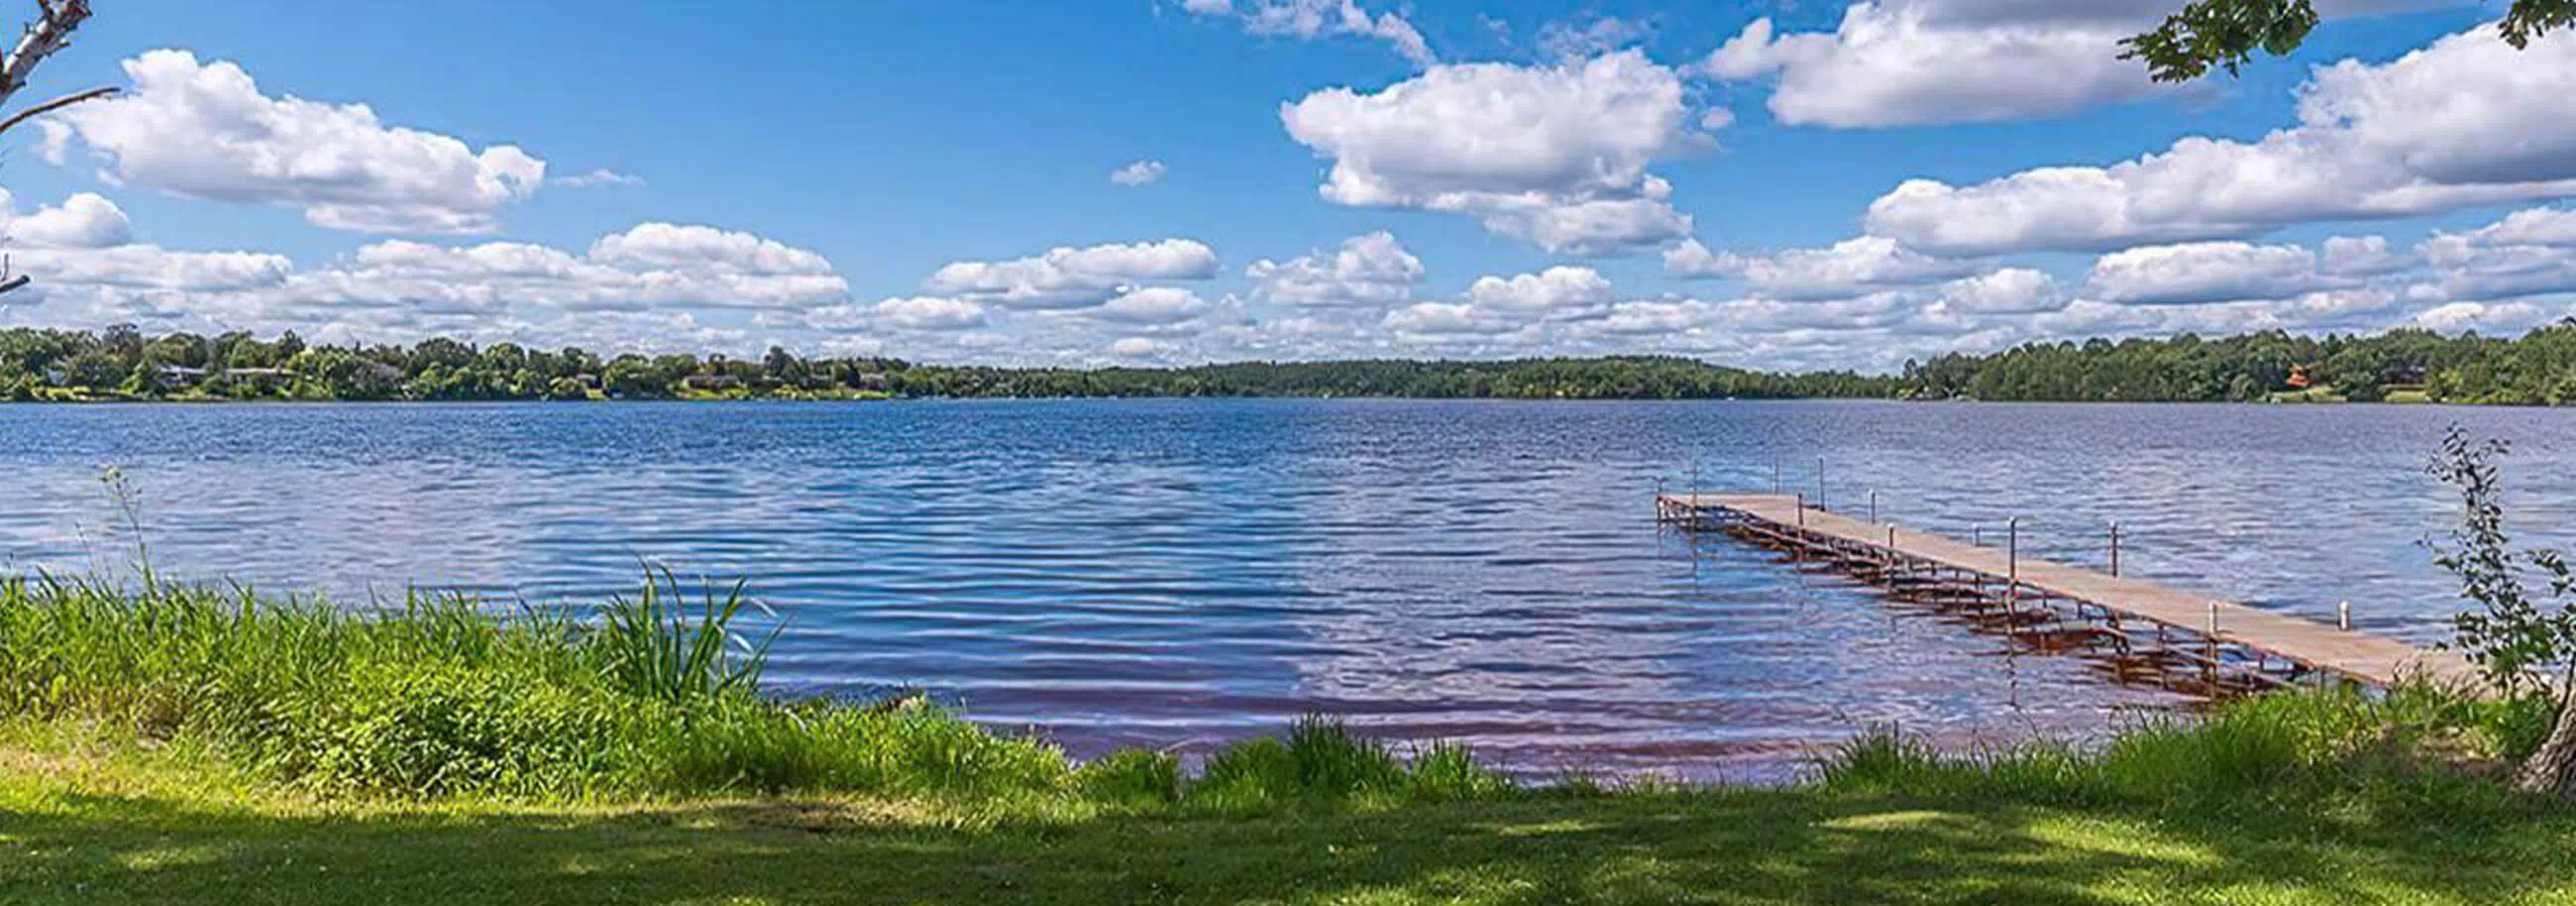 view of a sprawling lake